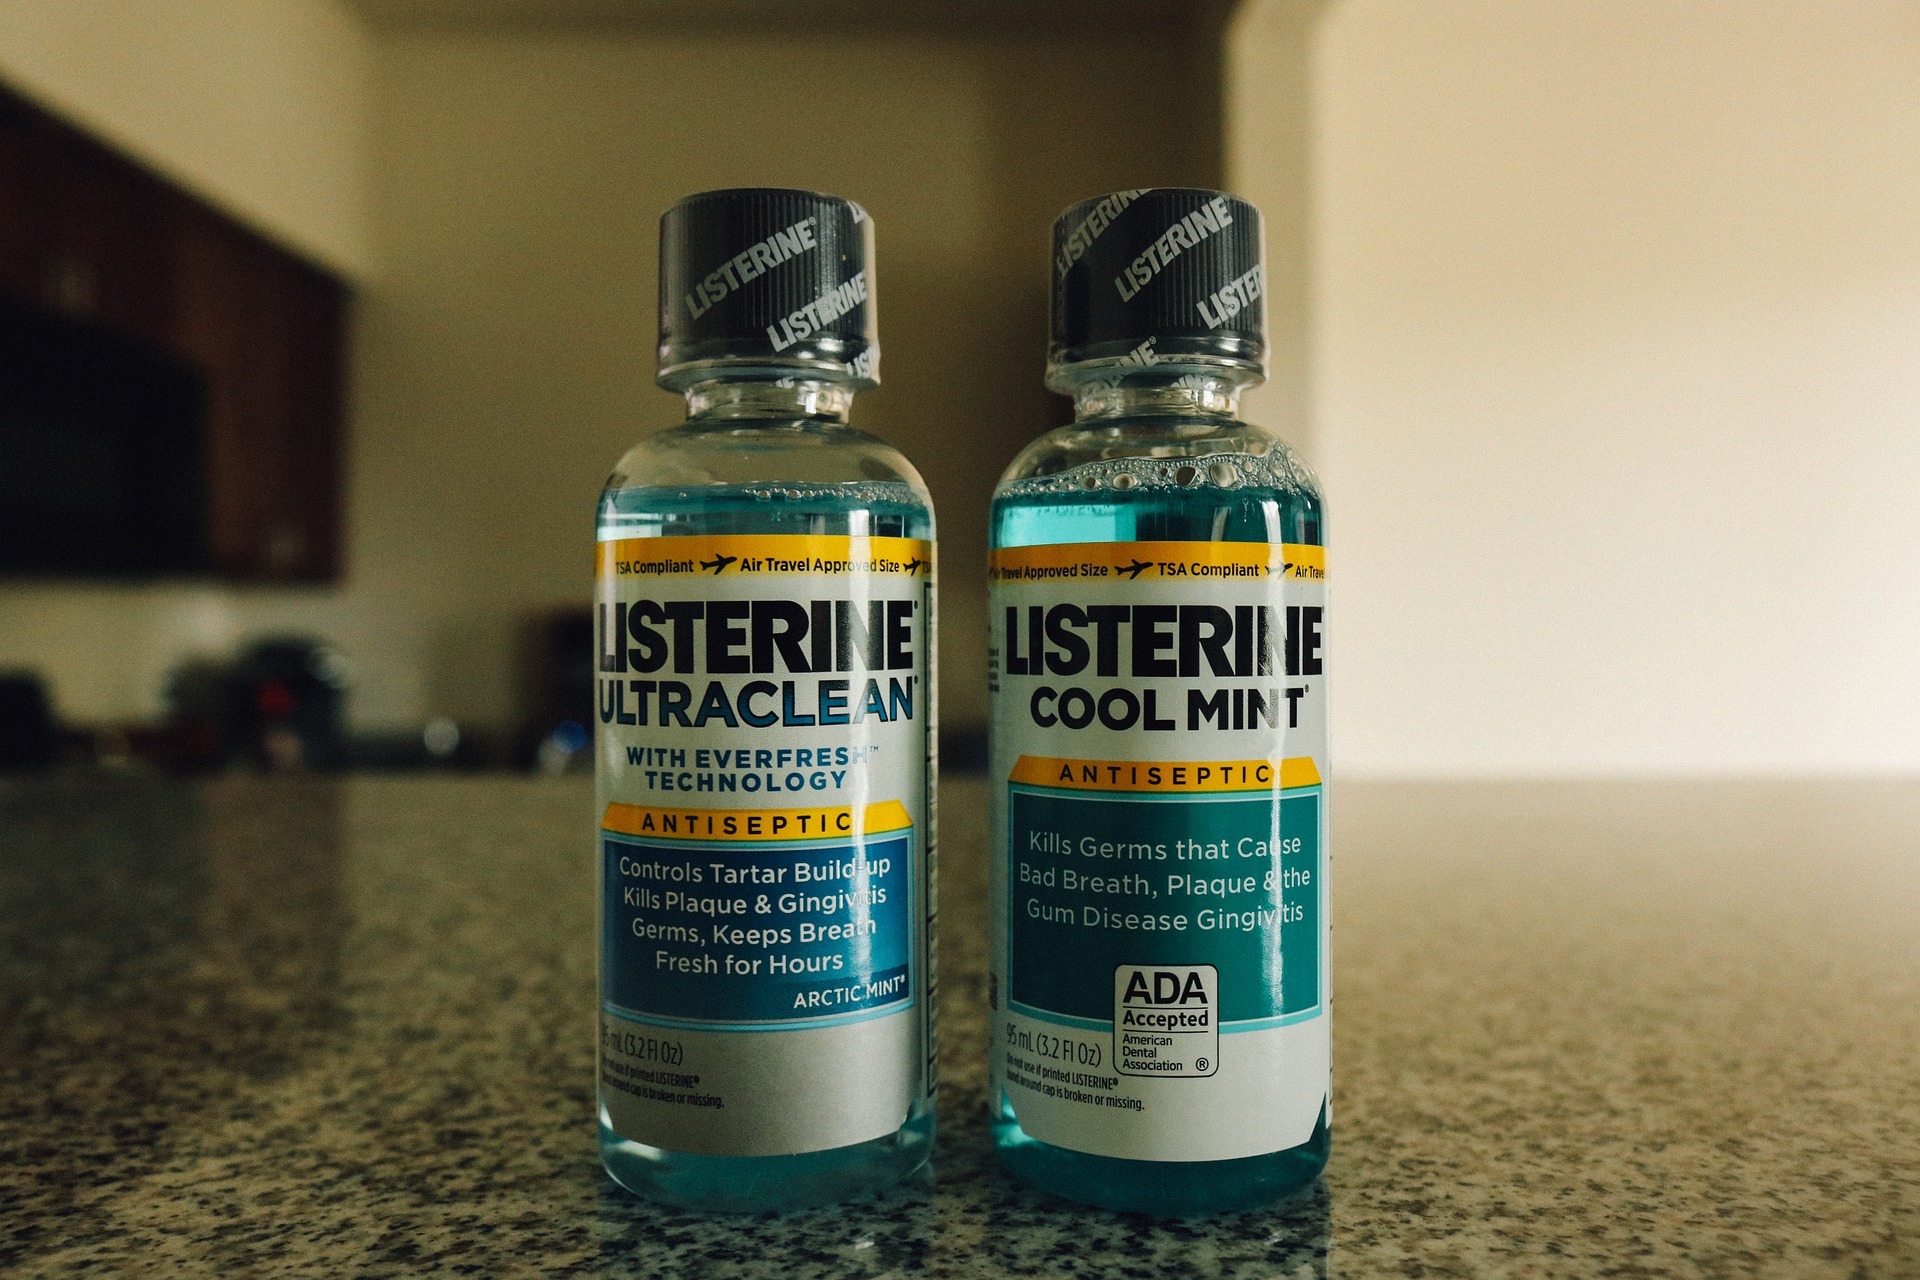 Listerine-Mouthwash